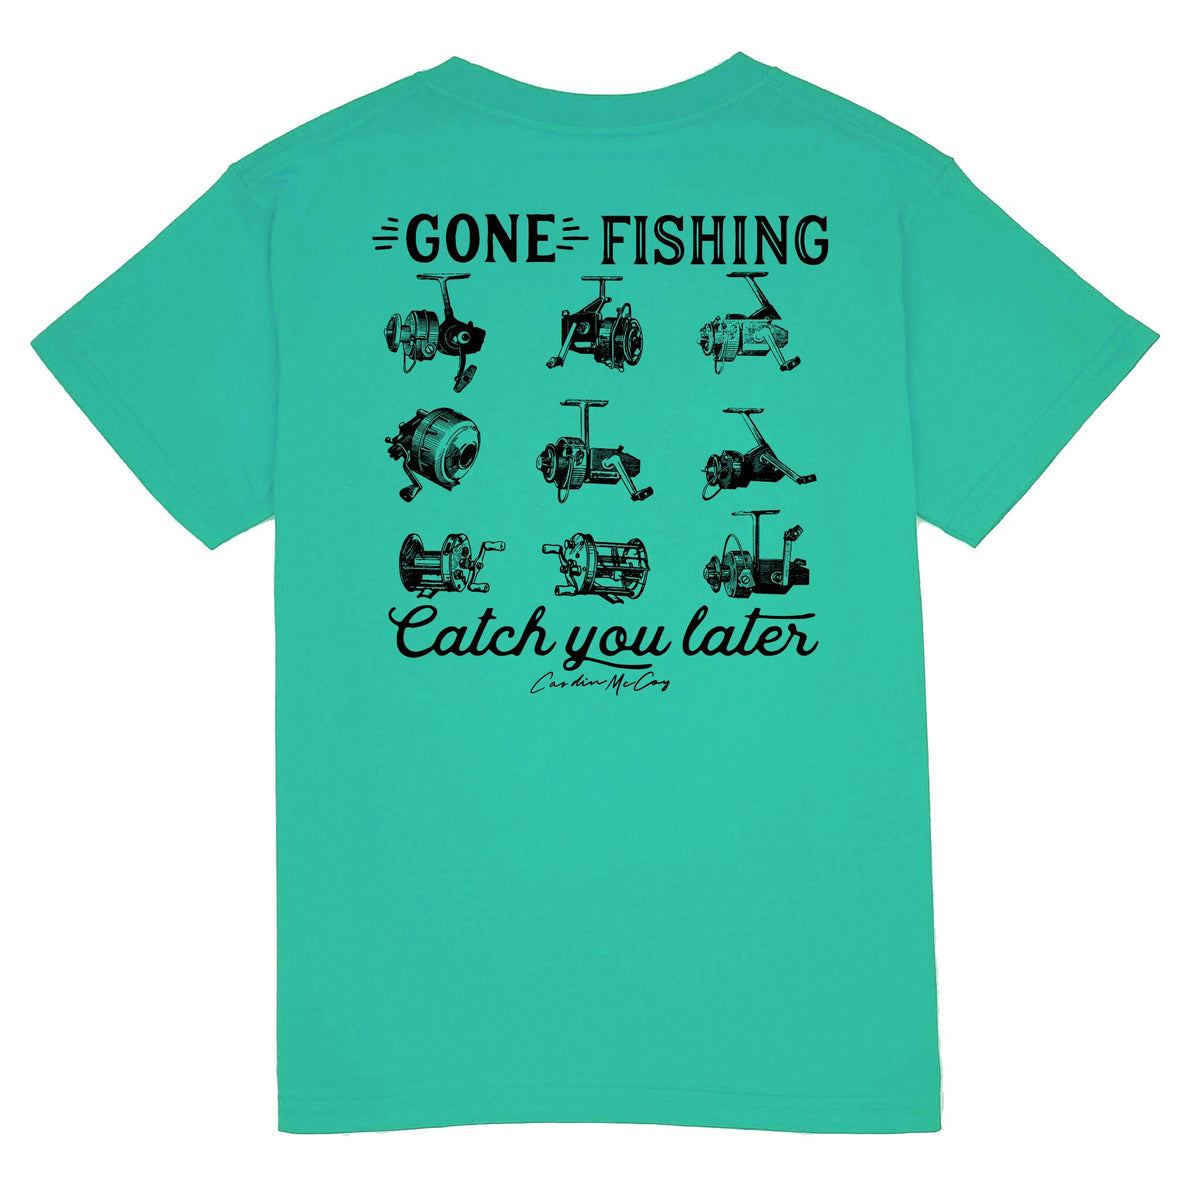 Gone Fishing Reels Short Sleeve Tee Short Sleeve T-Shirt Cardin McCoy Teal XXS (2/3) 